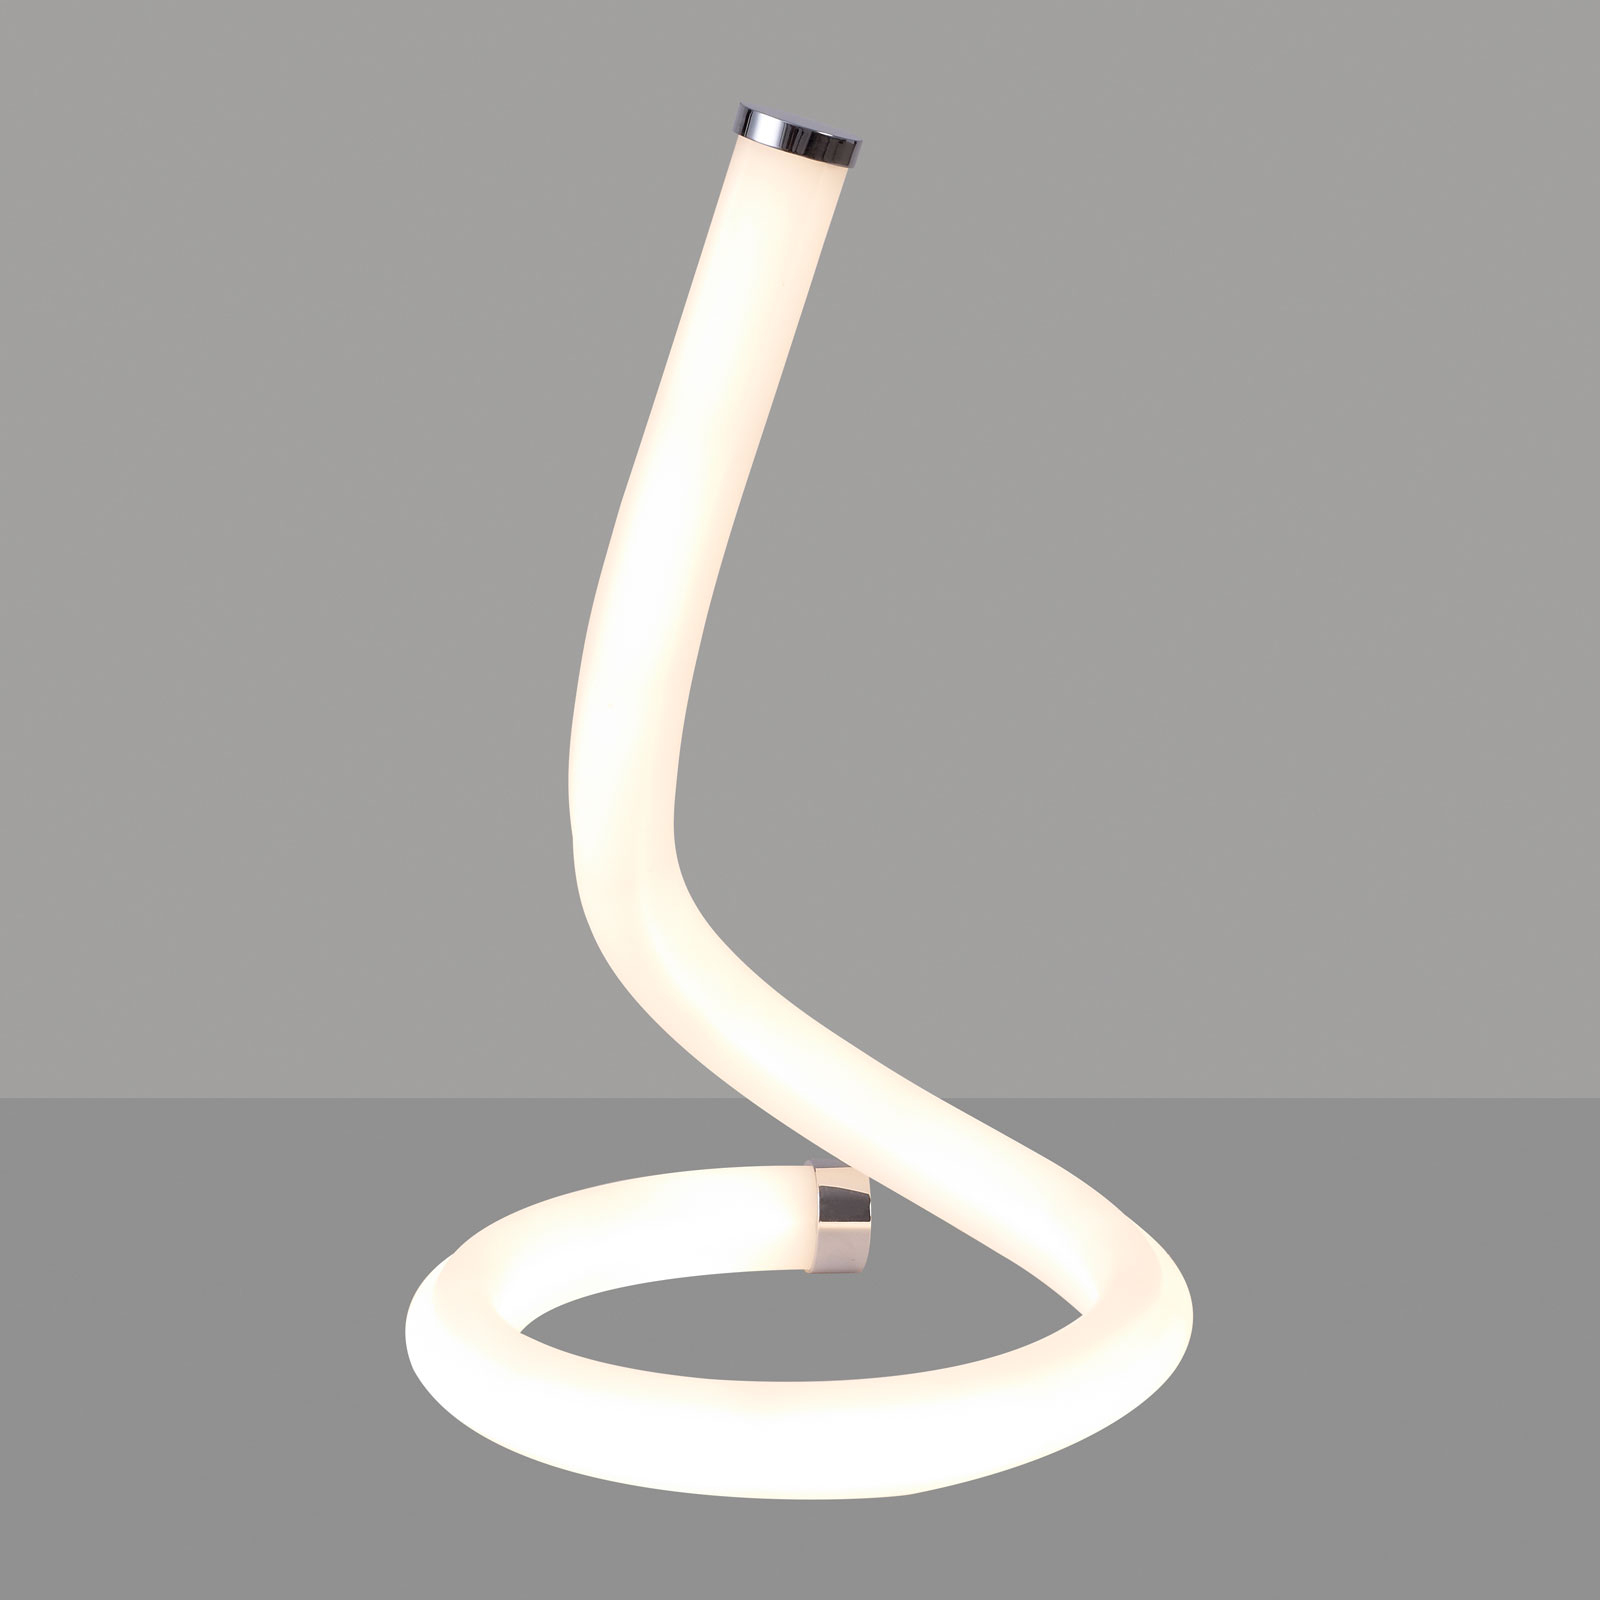 LED tafellamp Nur Line in chroom-wit